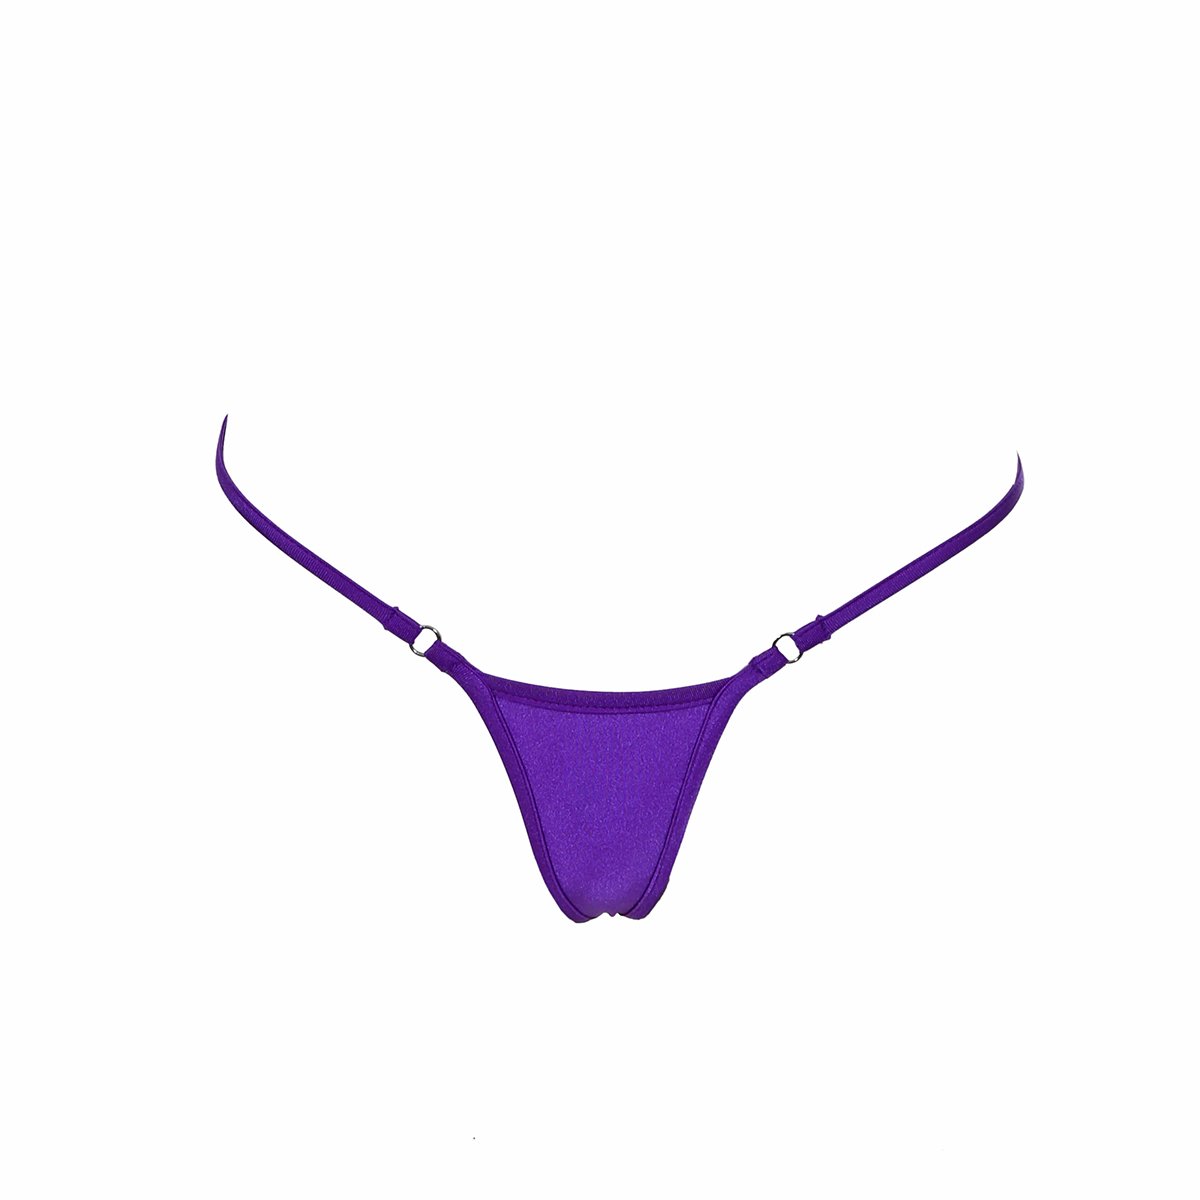 Thong g string micro bikini bottom bright neon purple